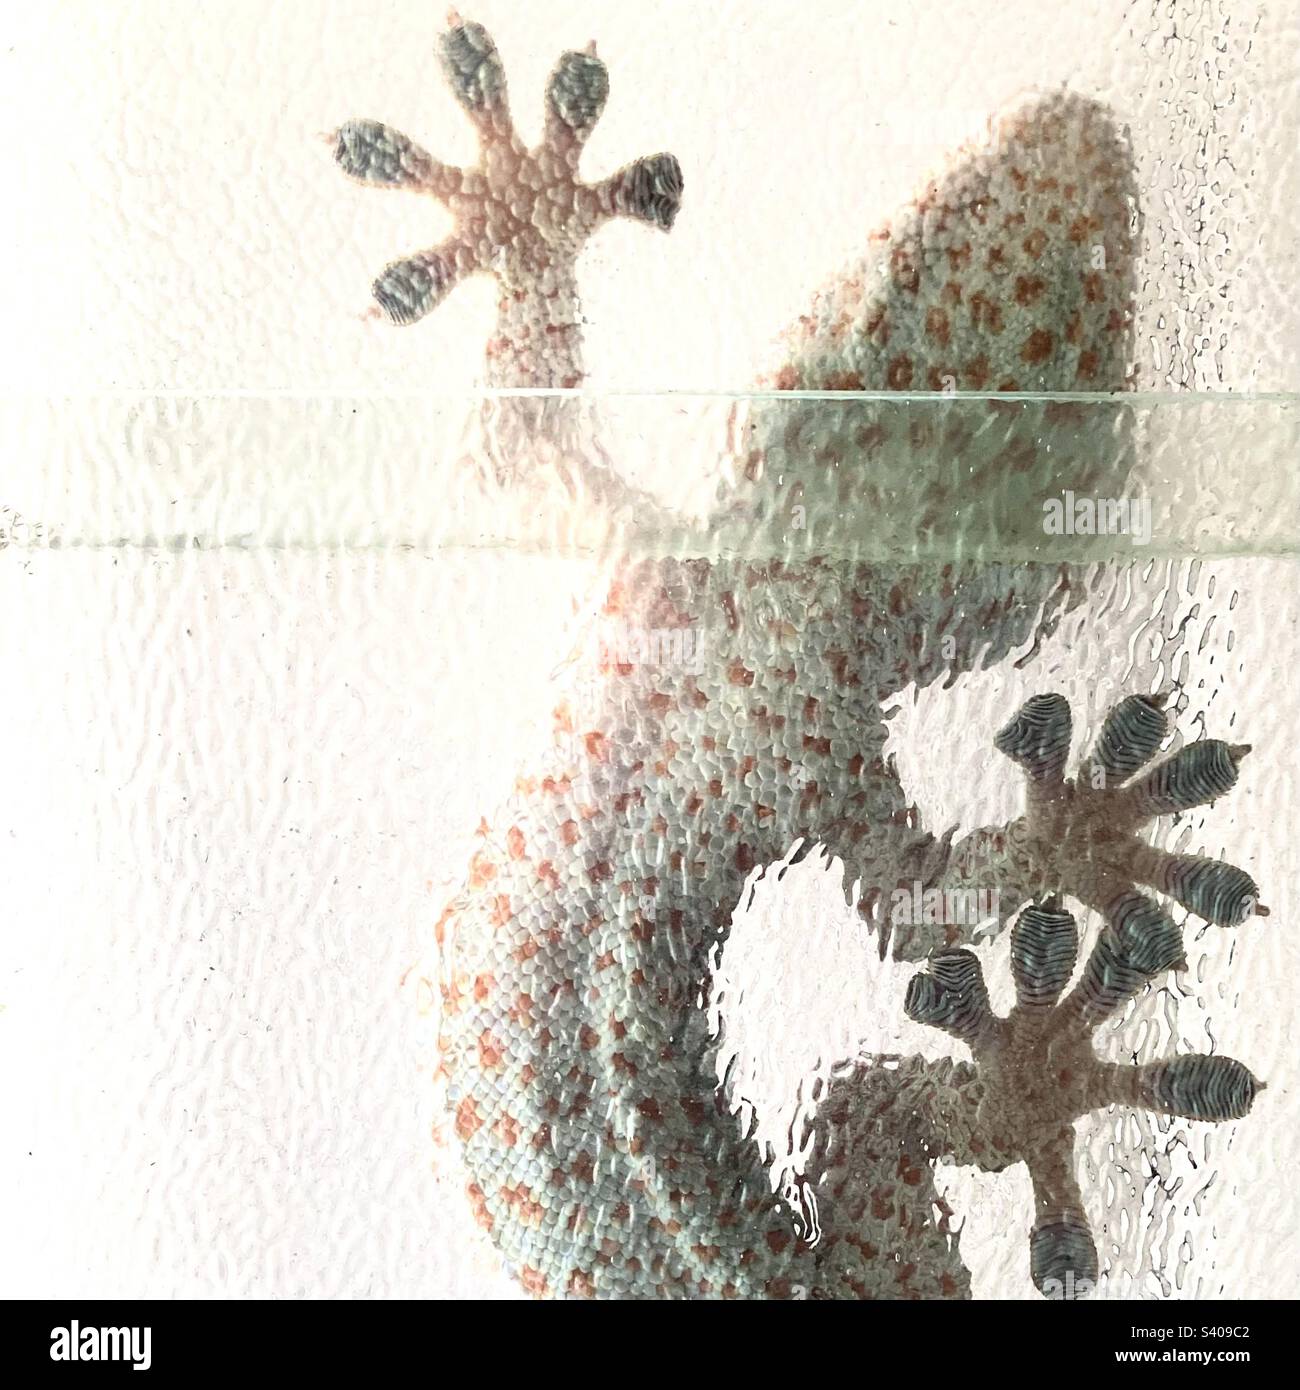 A Tokay Gecko as seen through a glass window pane Stock Photo